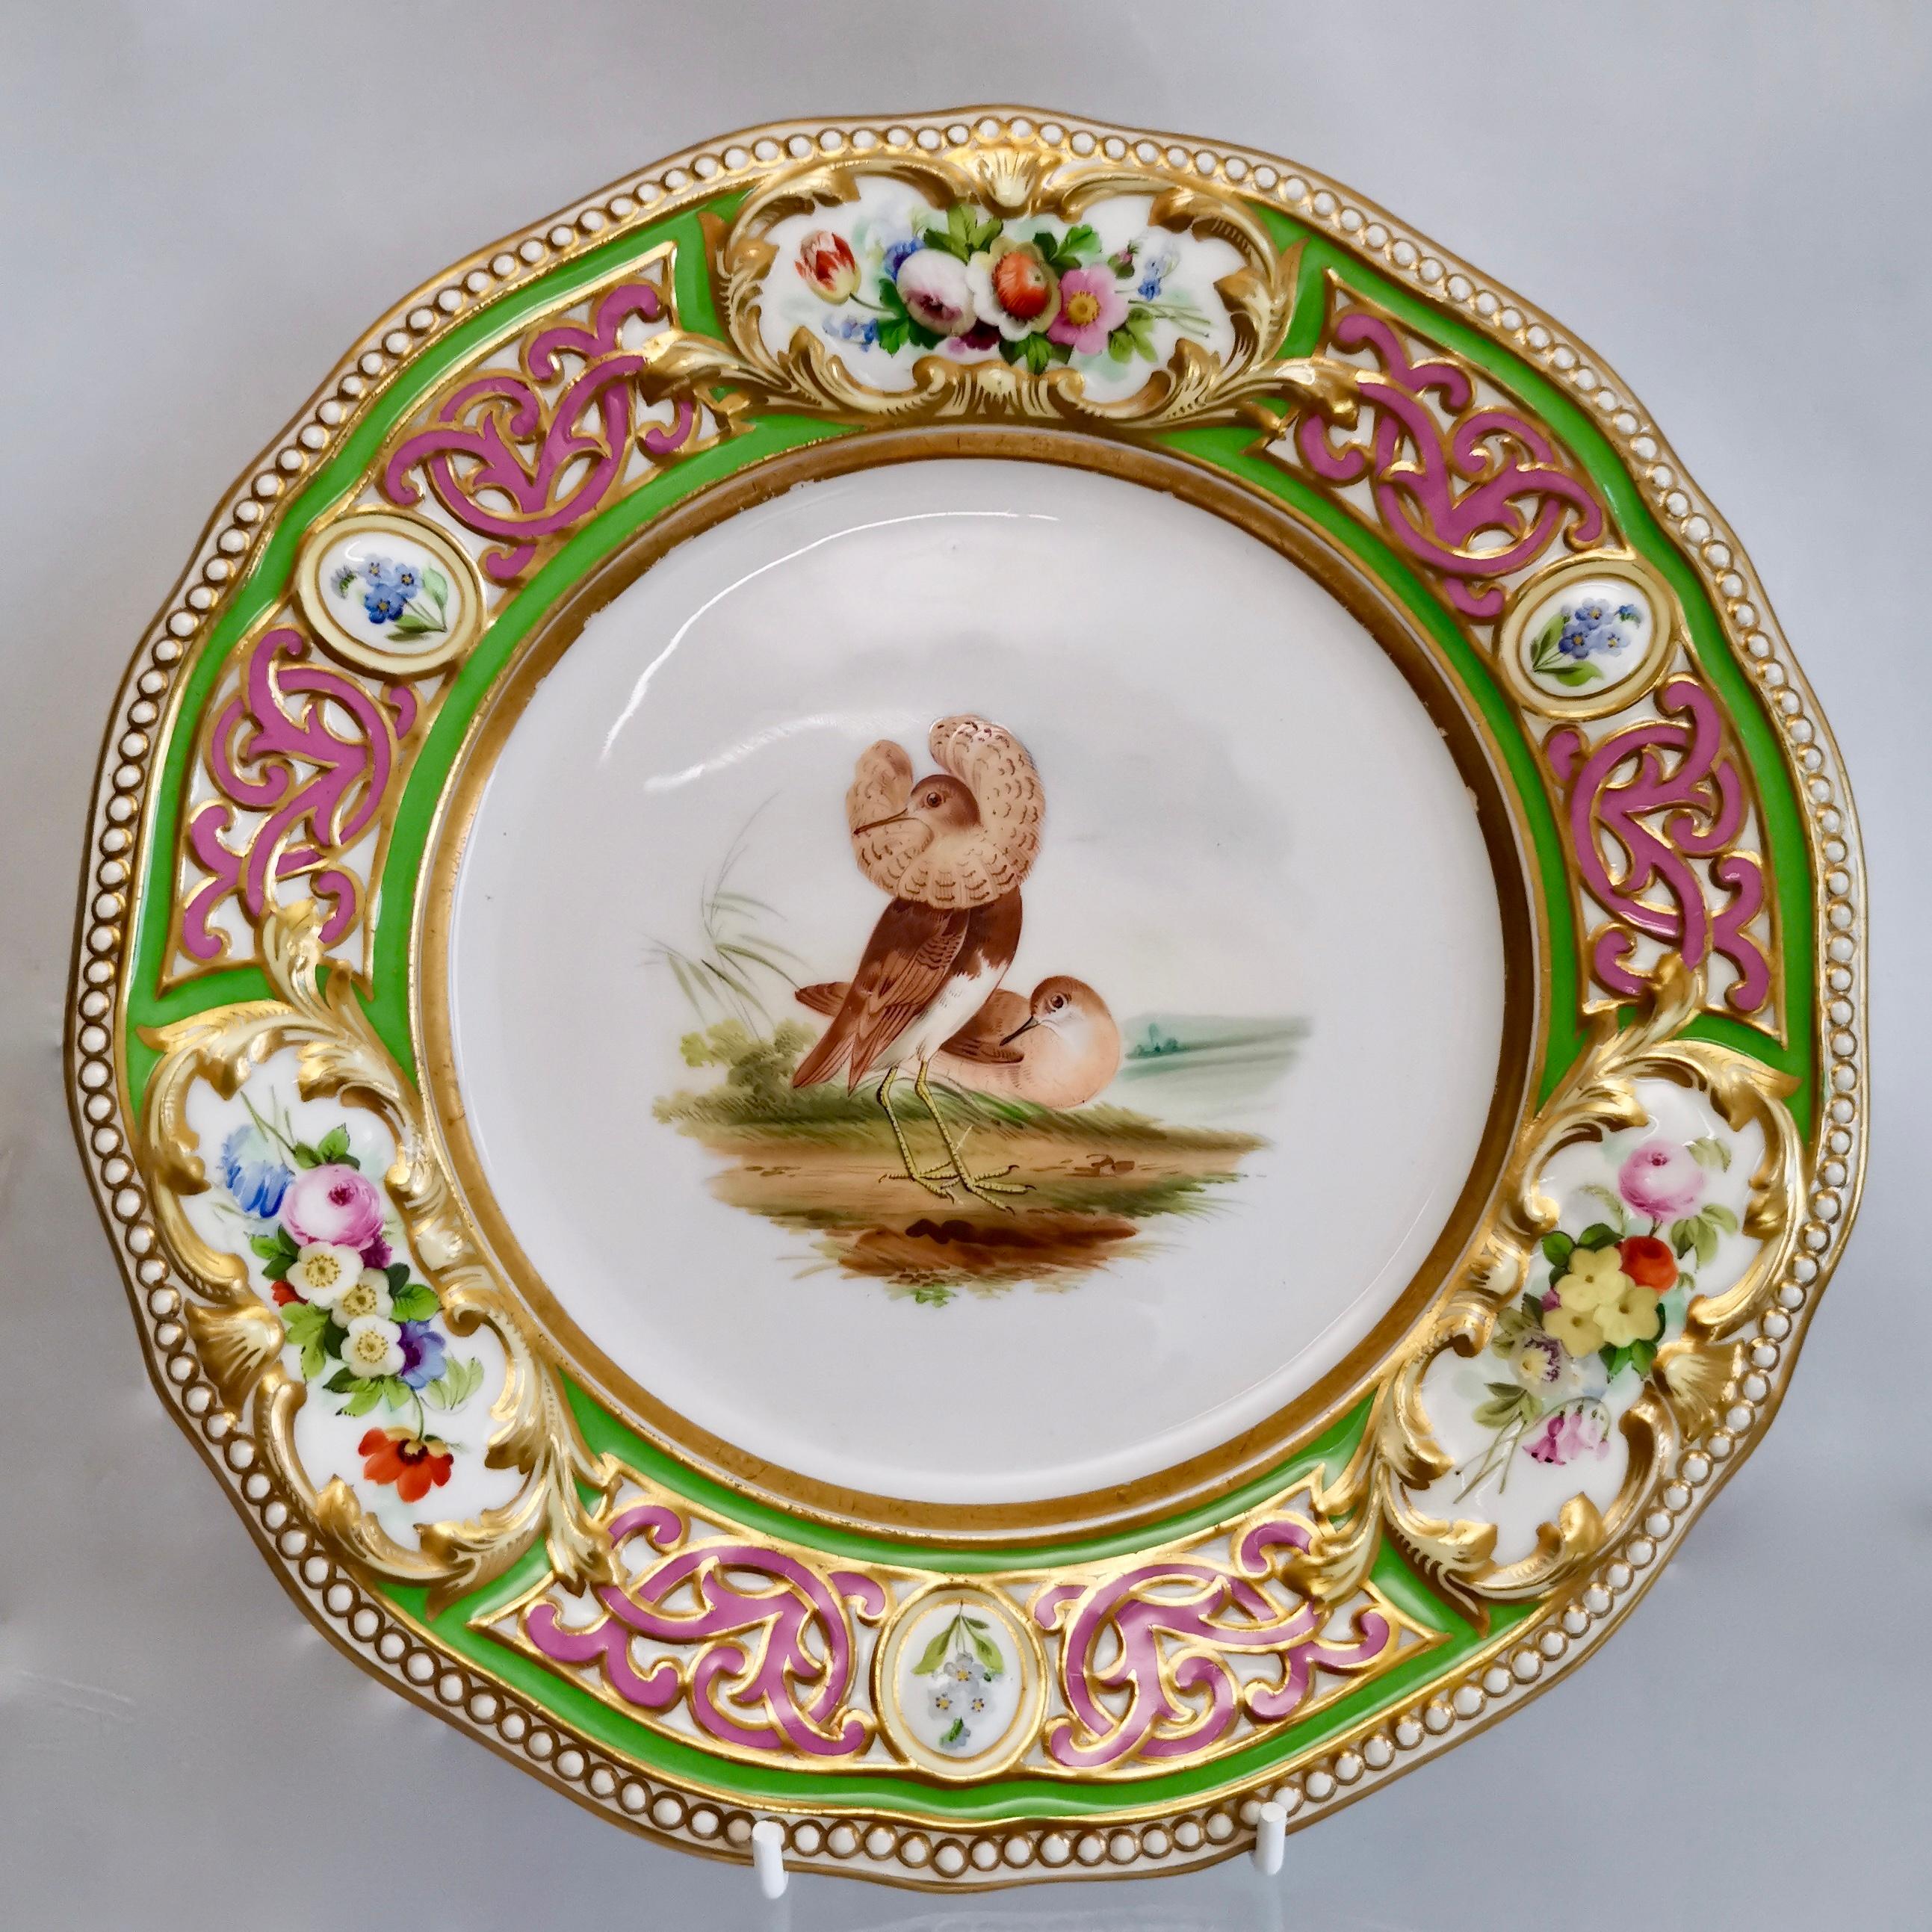 Grainger Worcester Porcelain Dessert Service, Persian Revival with Birds, 1855 8